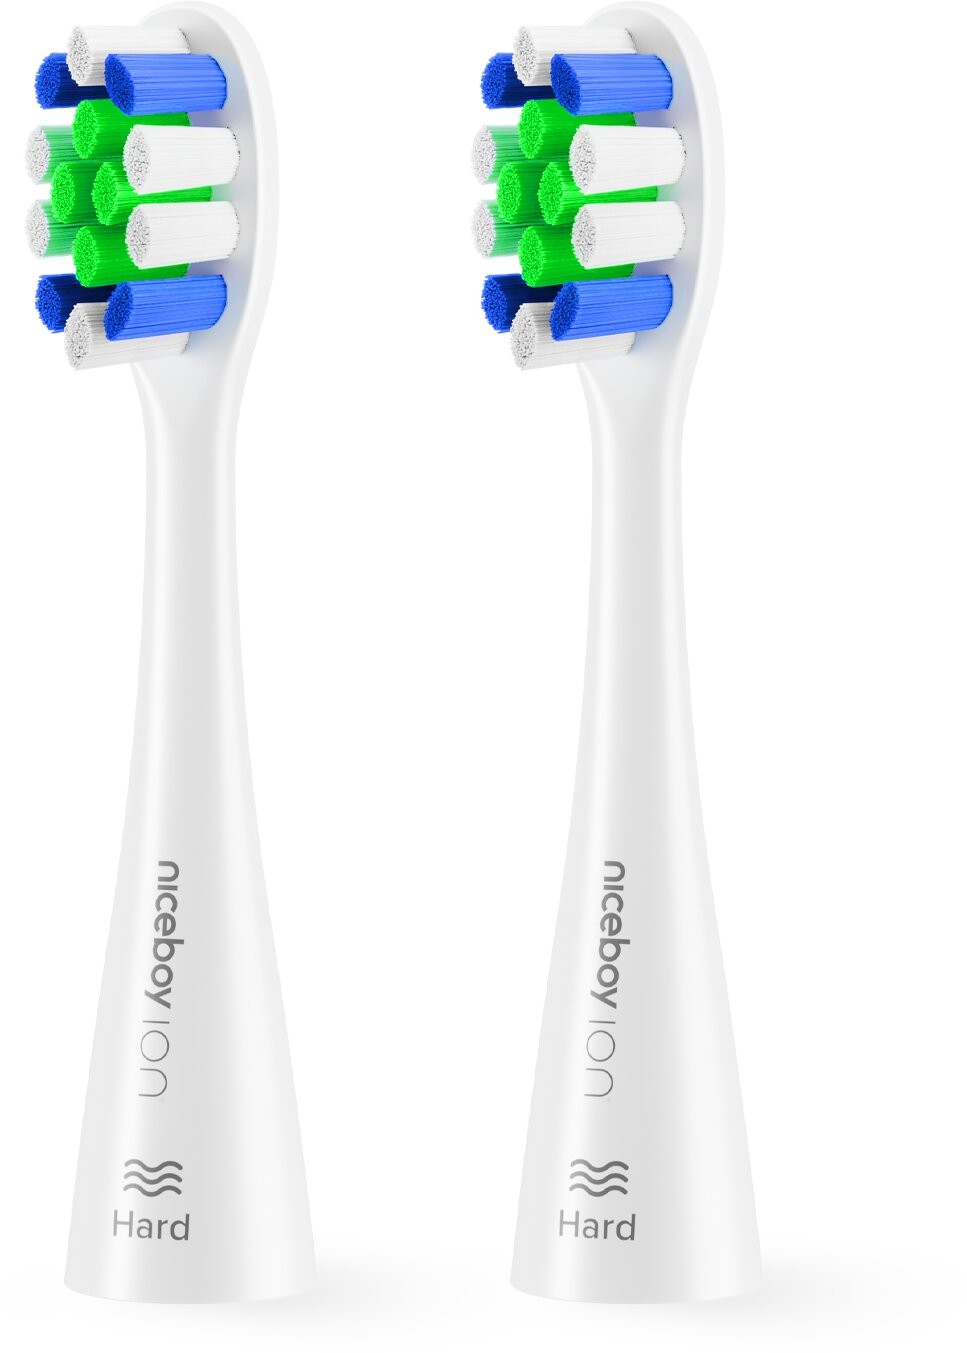 Niceboy ION Sonic Lite toothbrush heads 2 pcs Hard white - sonic-lite-hard-white